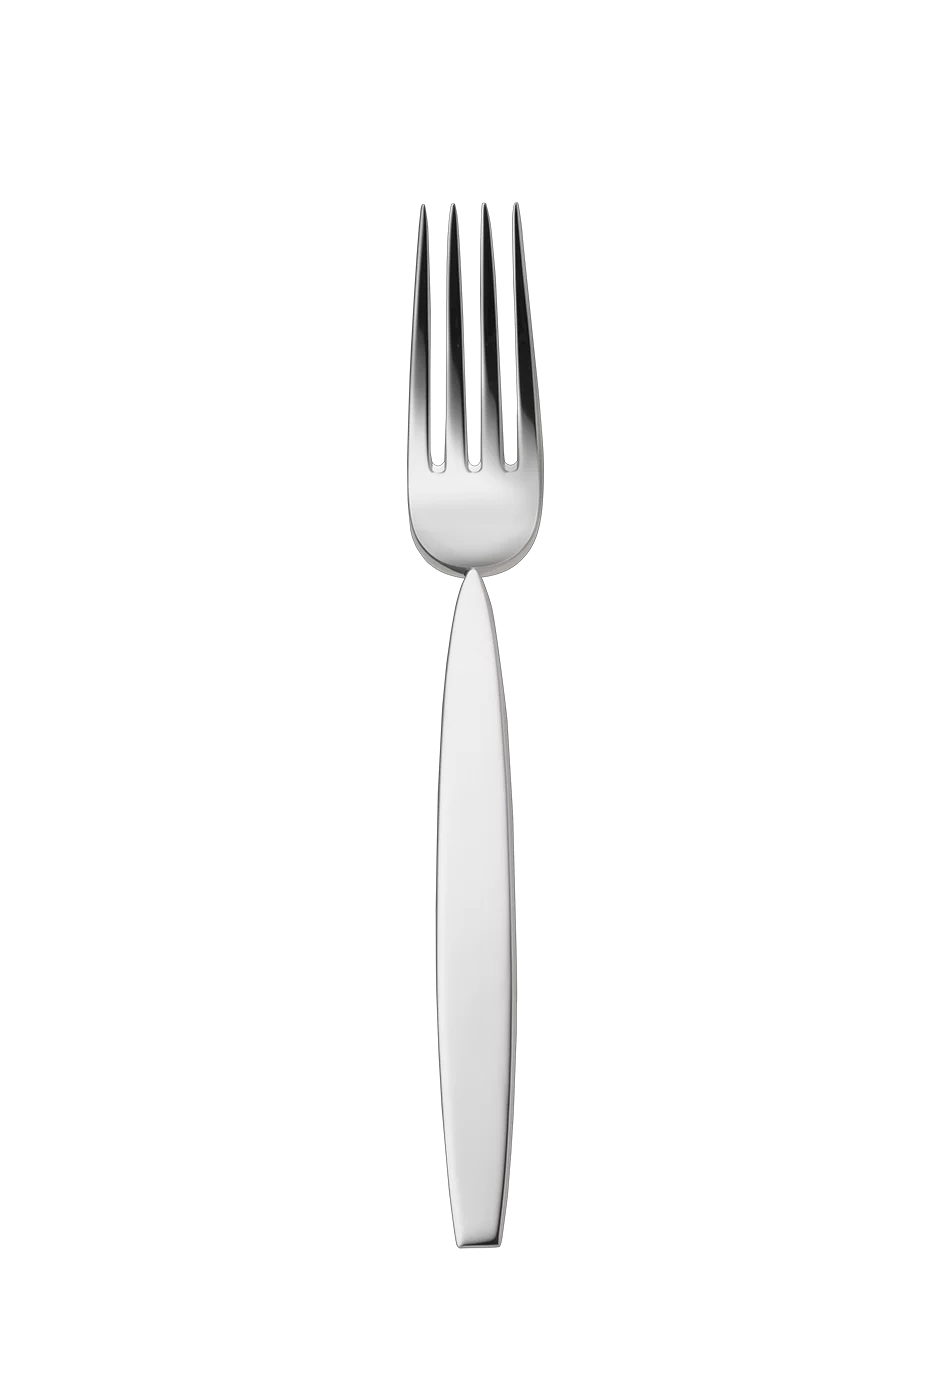 12" Dessert Fork (150g massive silverplated)